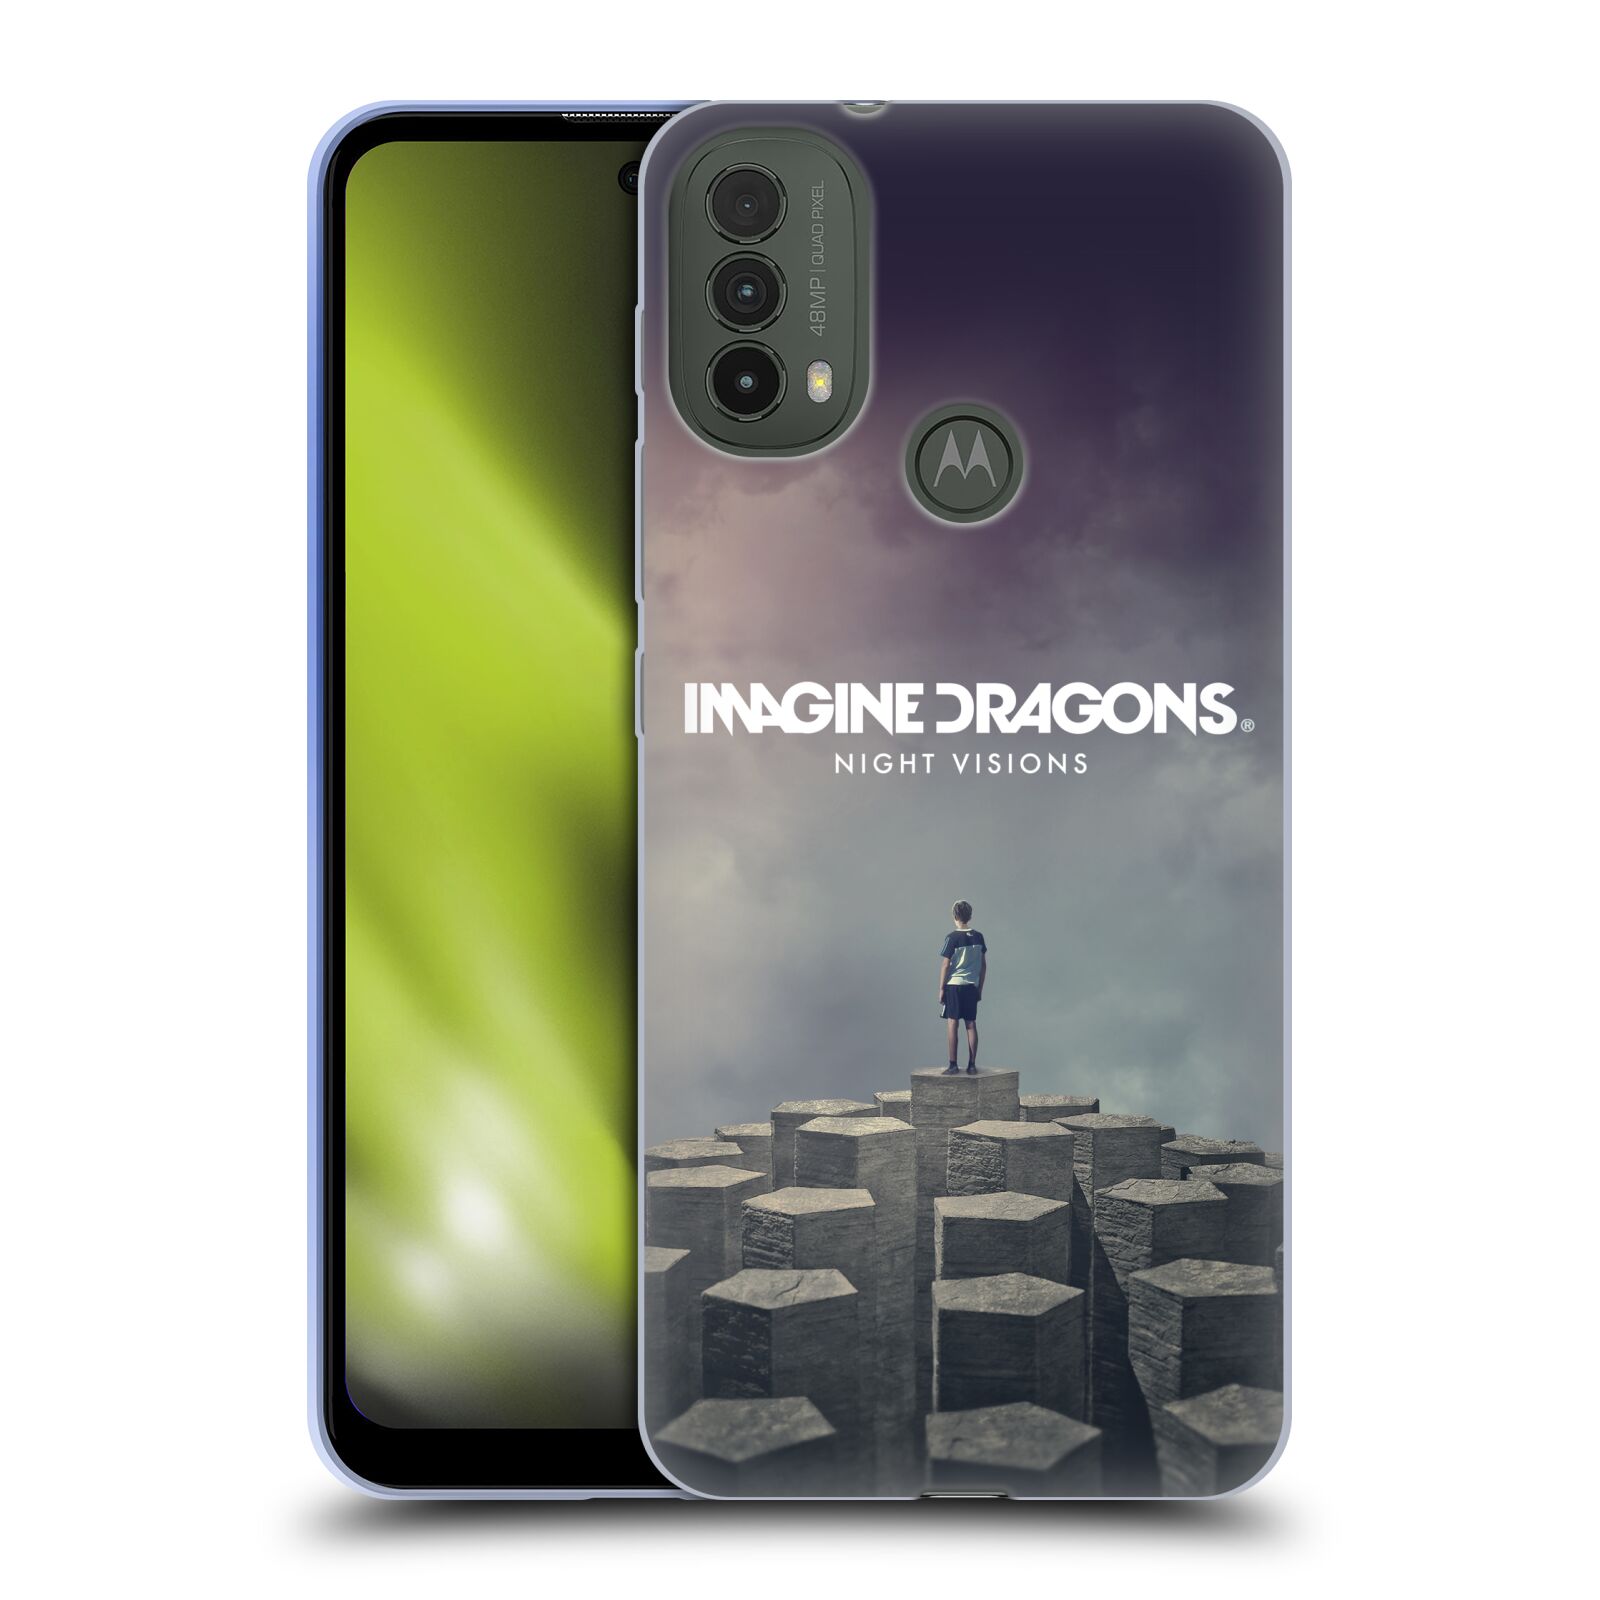 Silikonové pouzdro na mobil Motorola Moto E40 - Imagine Dragons - Night Visions